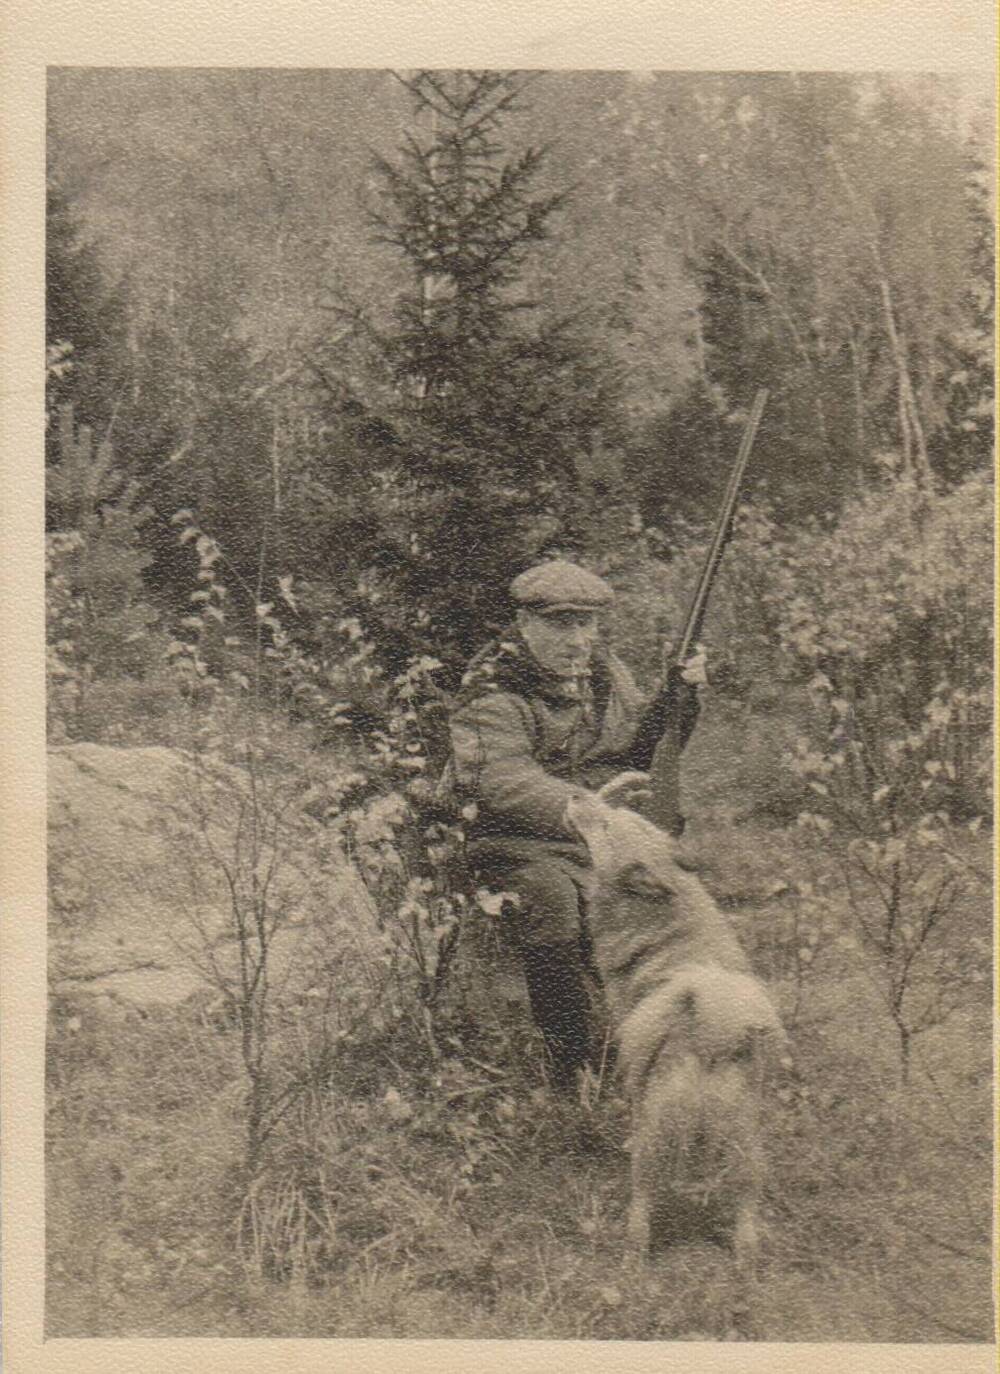 Фотография Лукина Н.И., сидящего на пне с ружьем, рядом собака